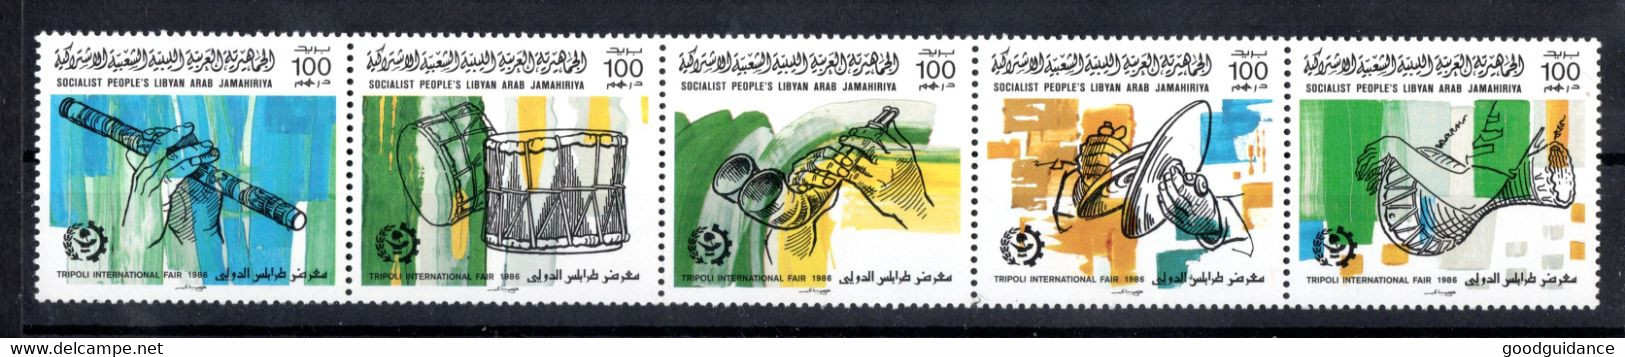 1986 - Libya - The 24th International Trade Fair, Tripoli - Musical Instruments - Strip Of 5 Stamps - MNH** - Libyen